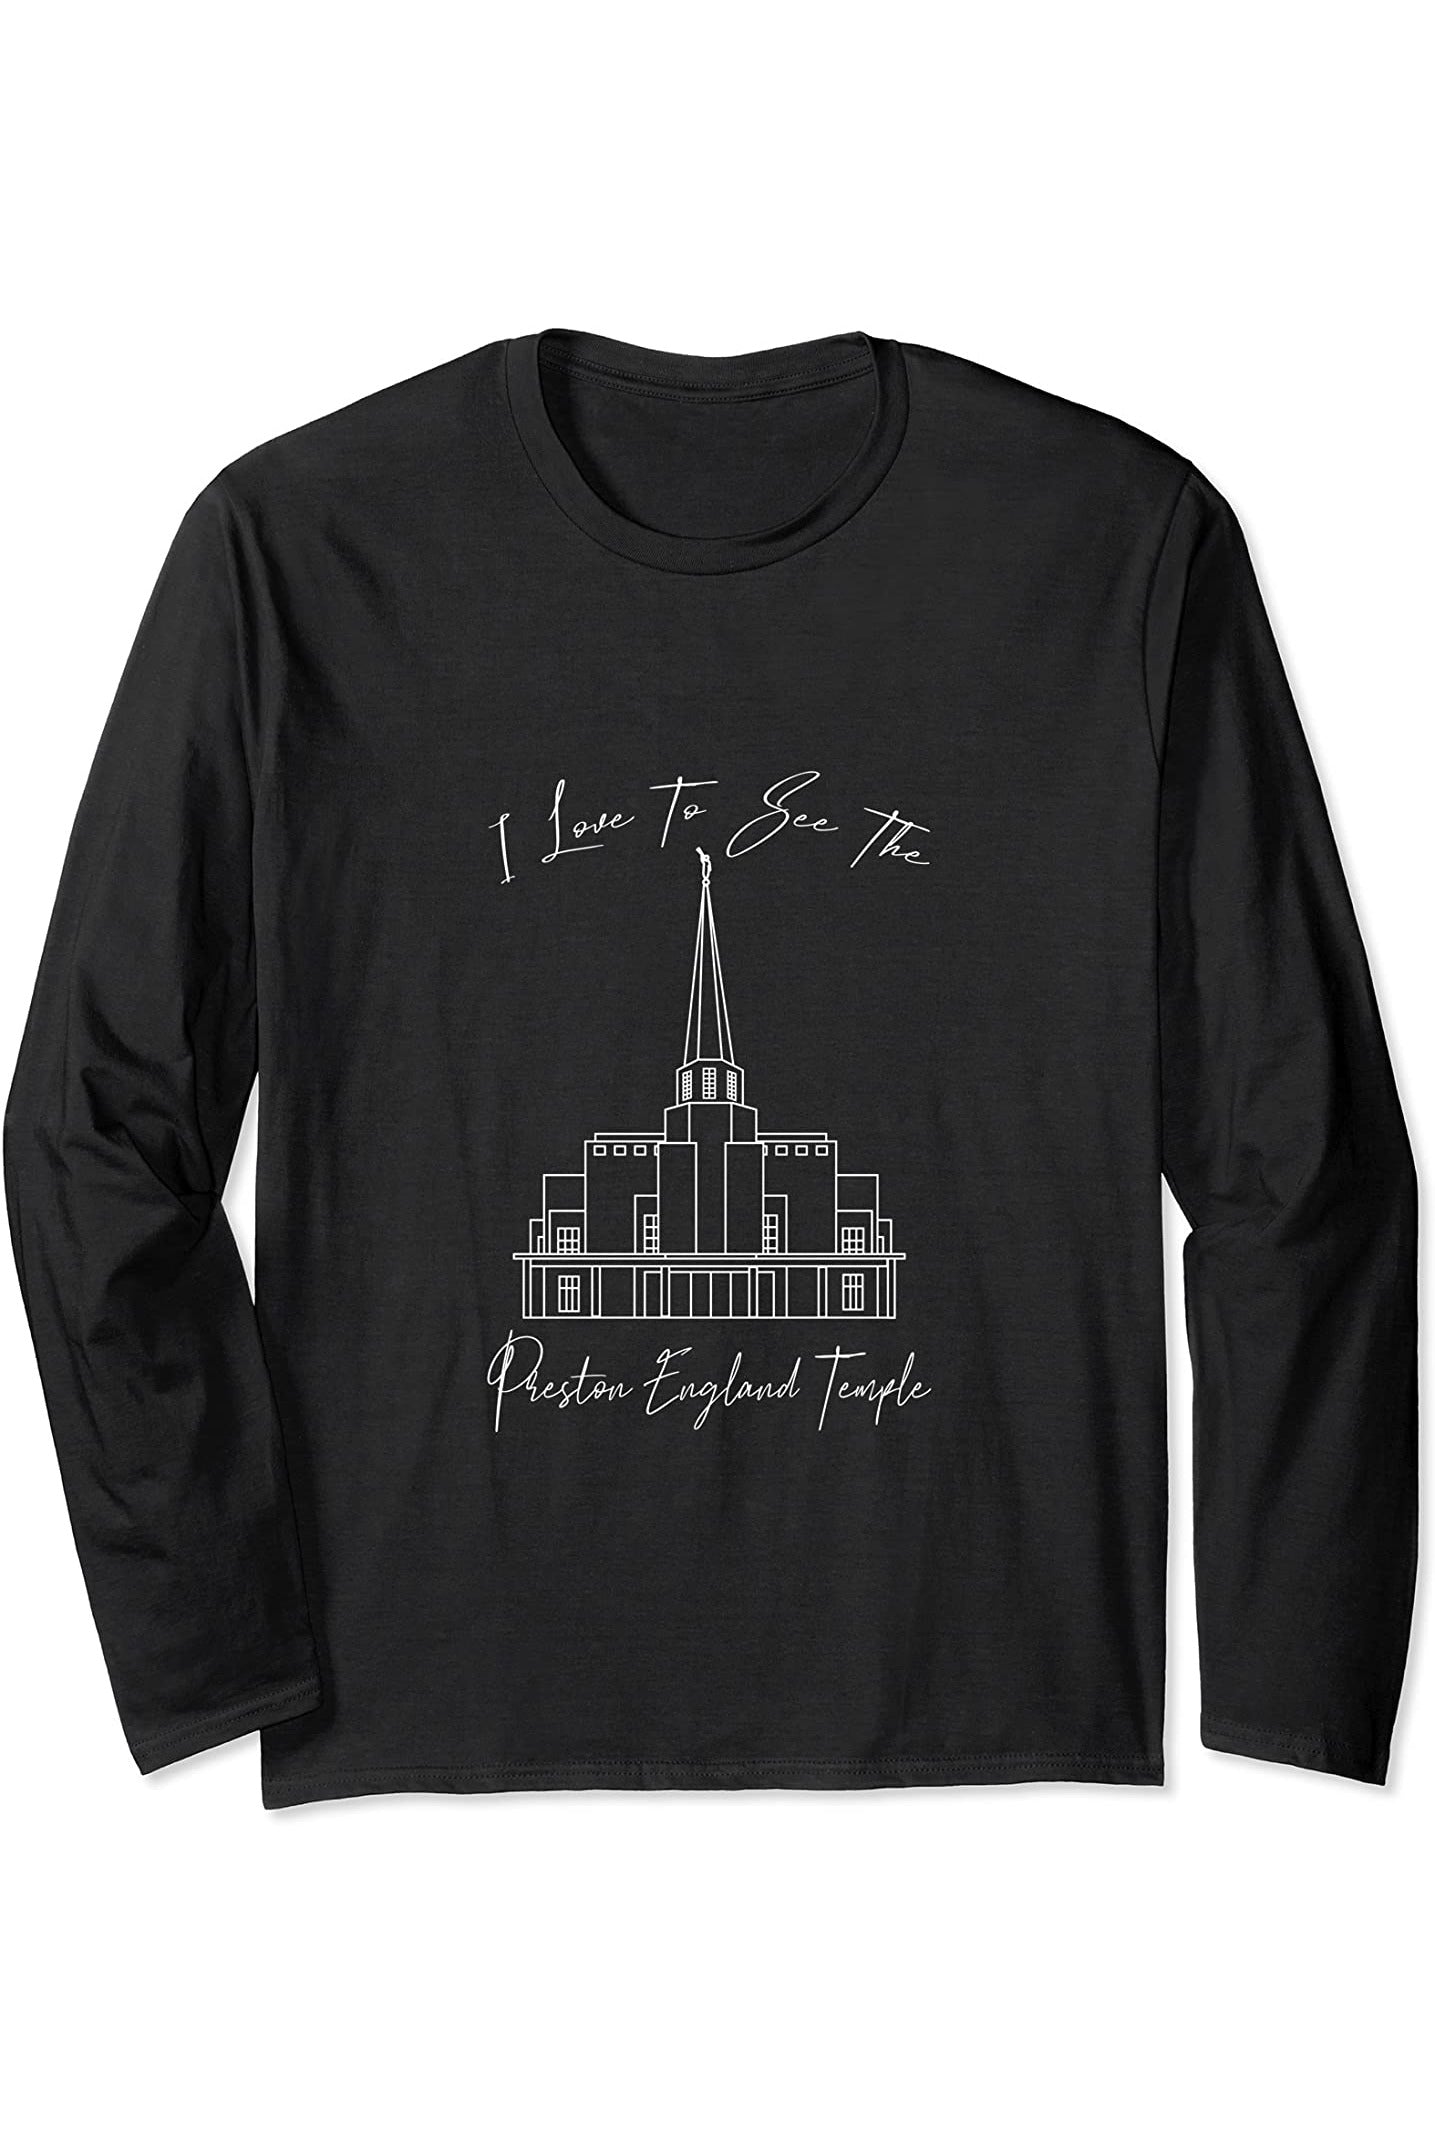 Preston England Temple Long Sleeve T-Shirt - Calligraphy Style (English) US